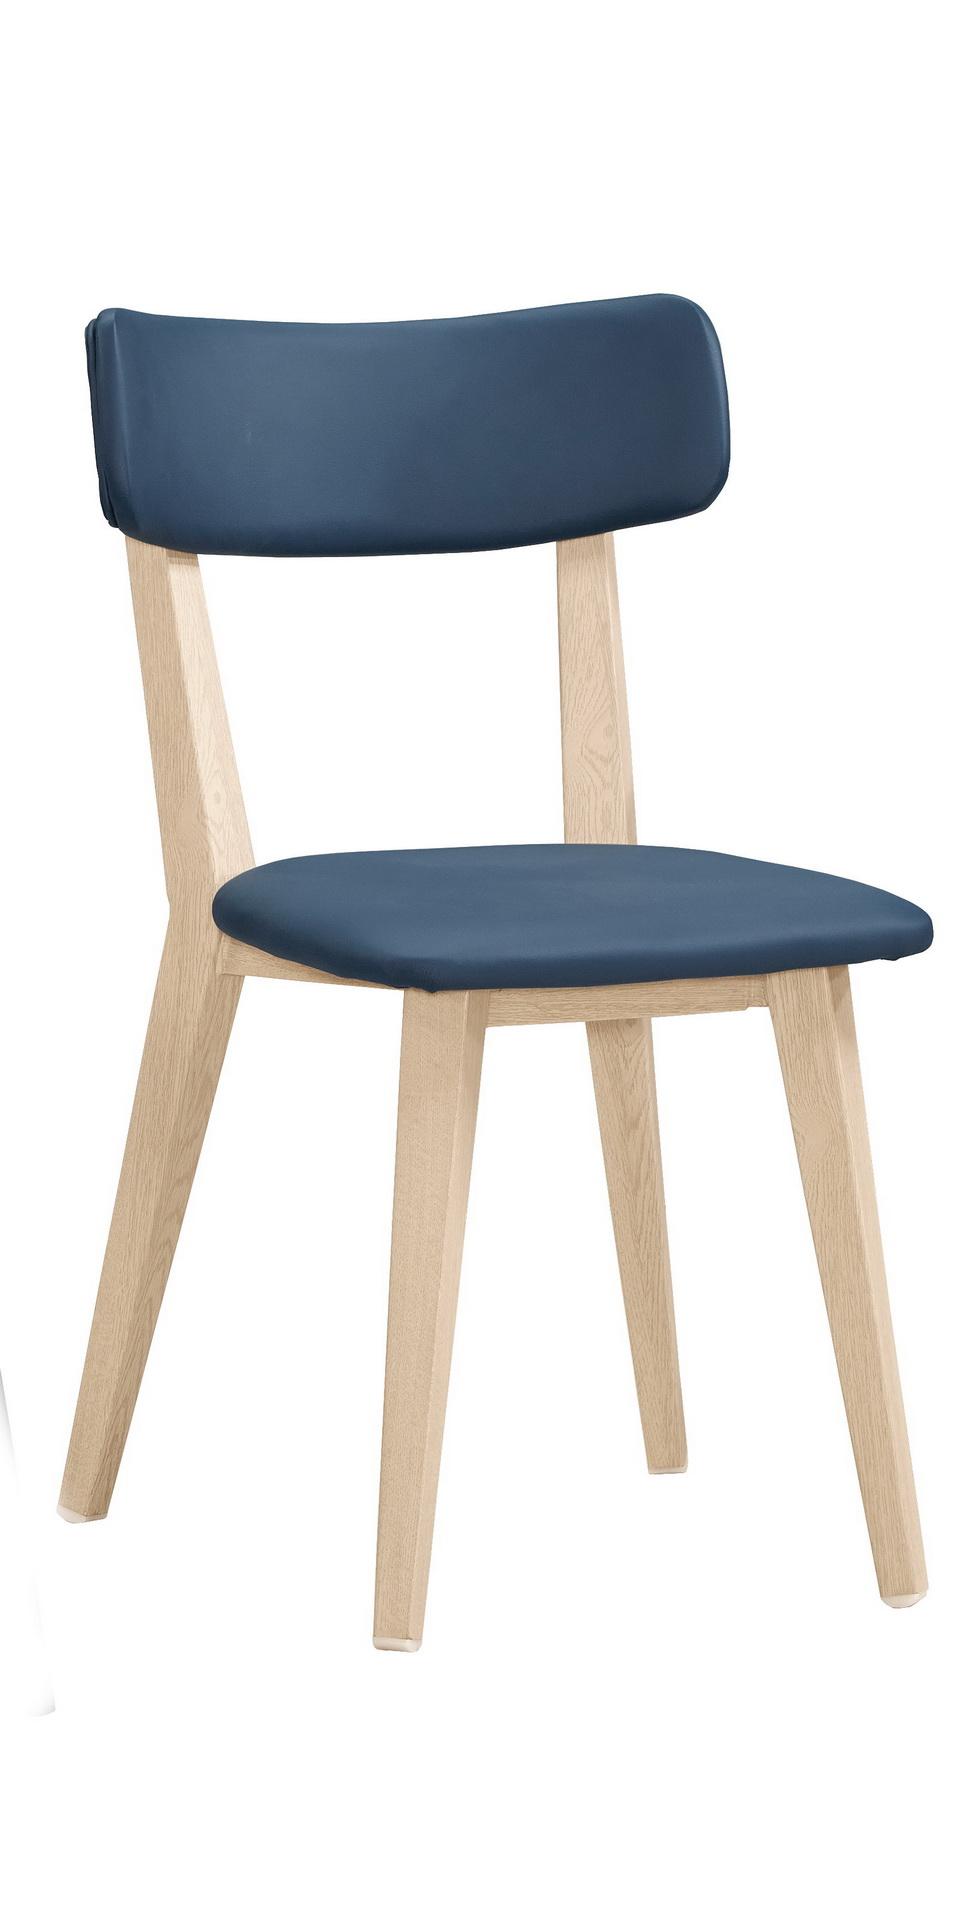 QM-646-3 安琪拉餐椅(深藍色皮)(五金腳) (不含其他產品)<br /> 尺寸:寬45*深51*高79cm